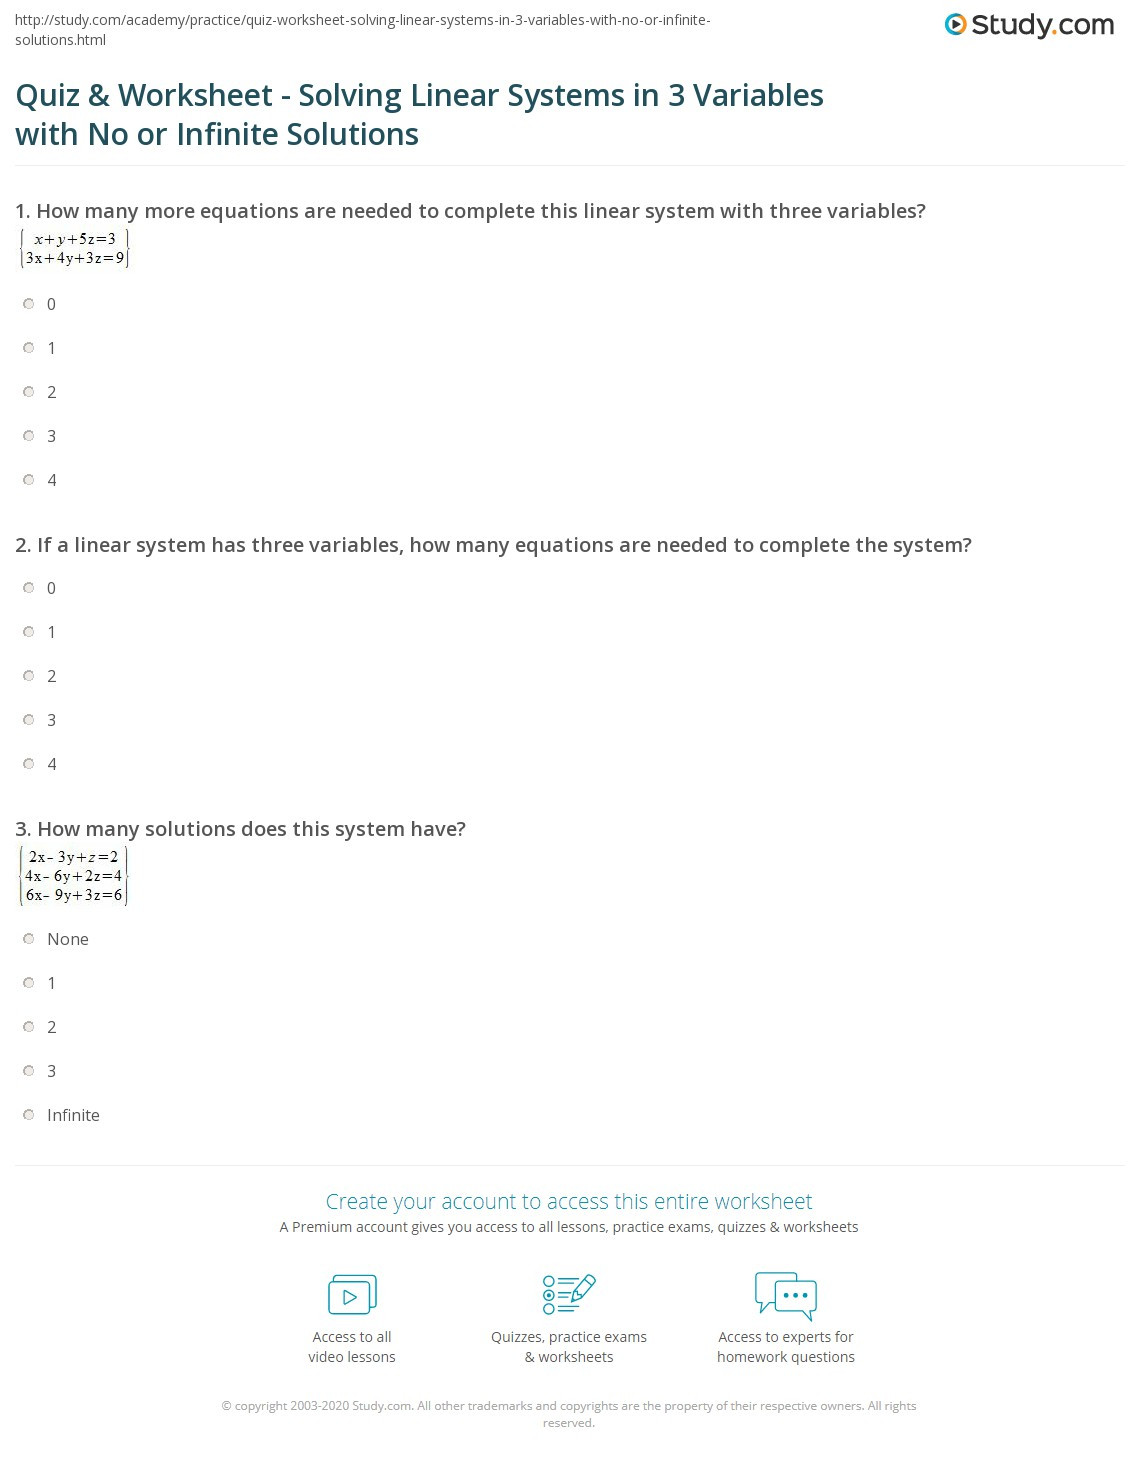 Solve by Elimination Worksheet Quiz &amp; Worksheet solving Linear Systems In 3 Variables